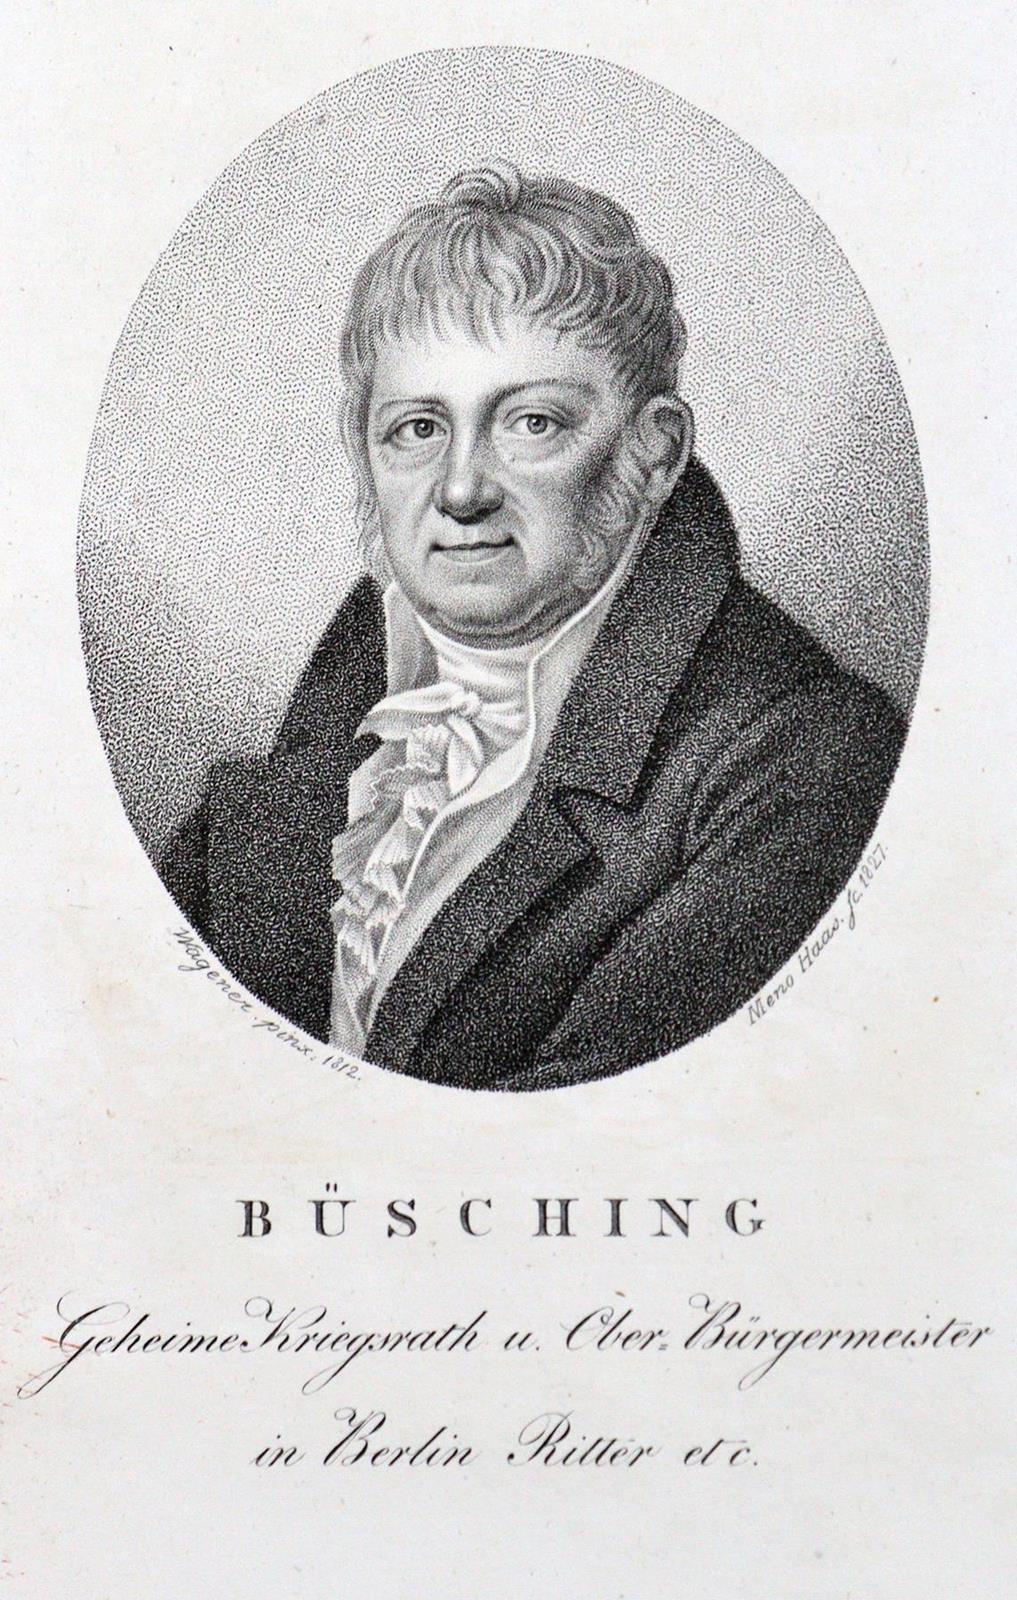 Krünitz,J.G. | Bild Nr.2